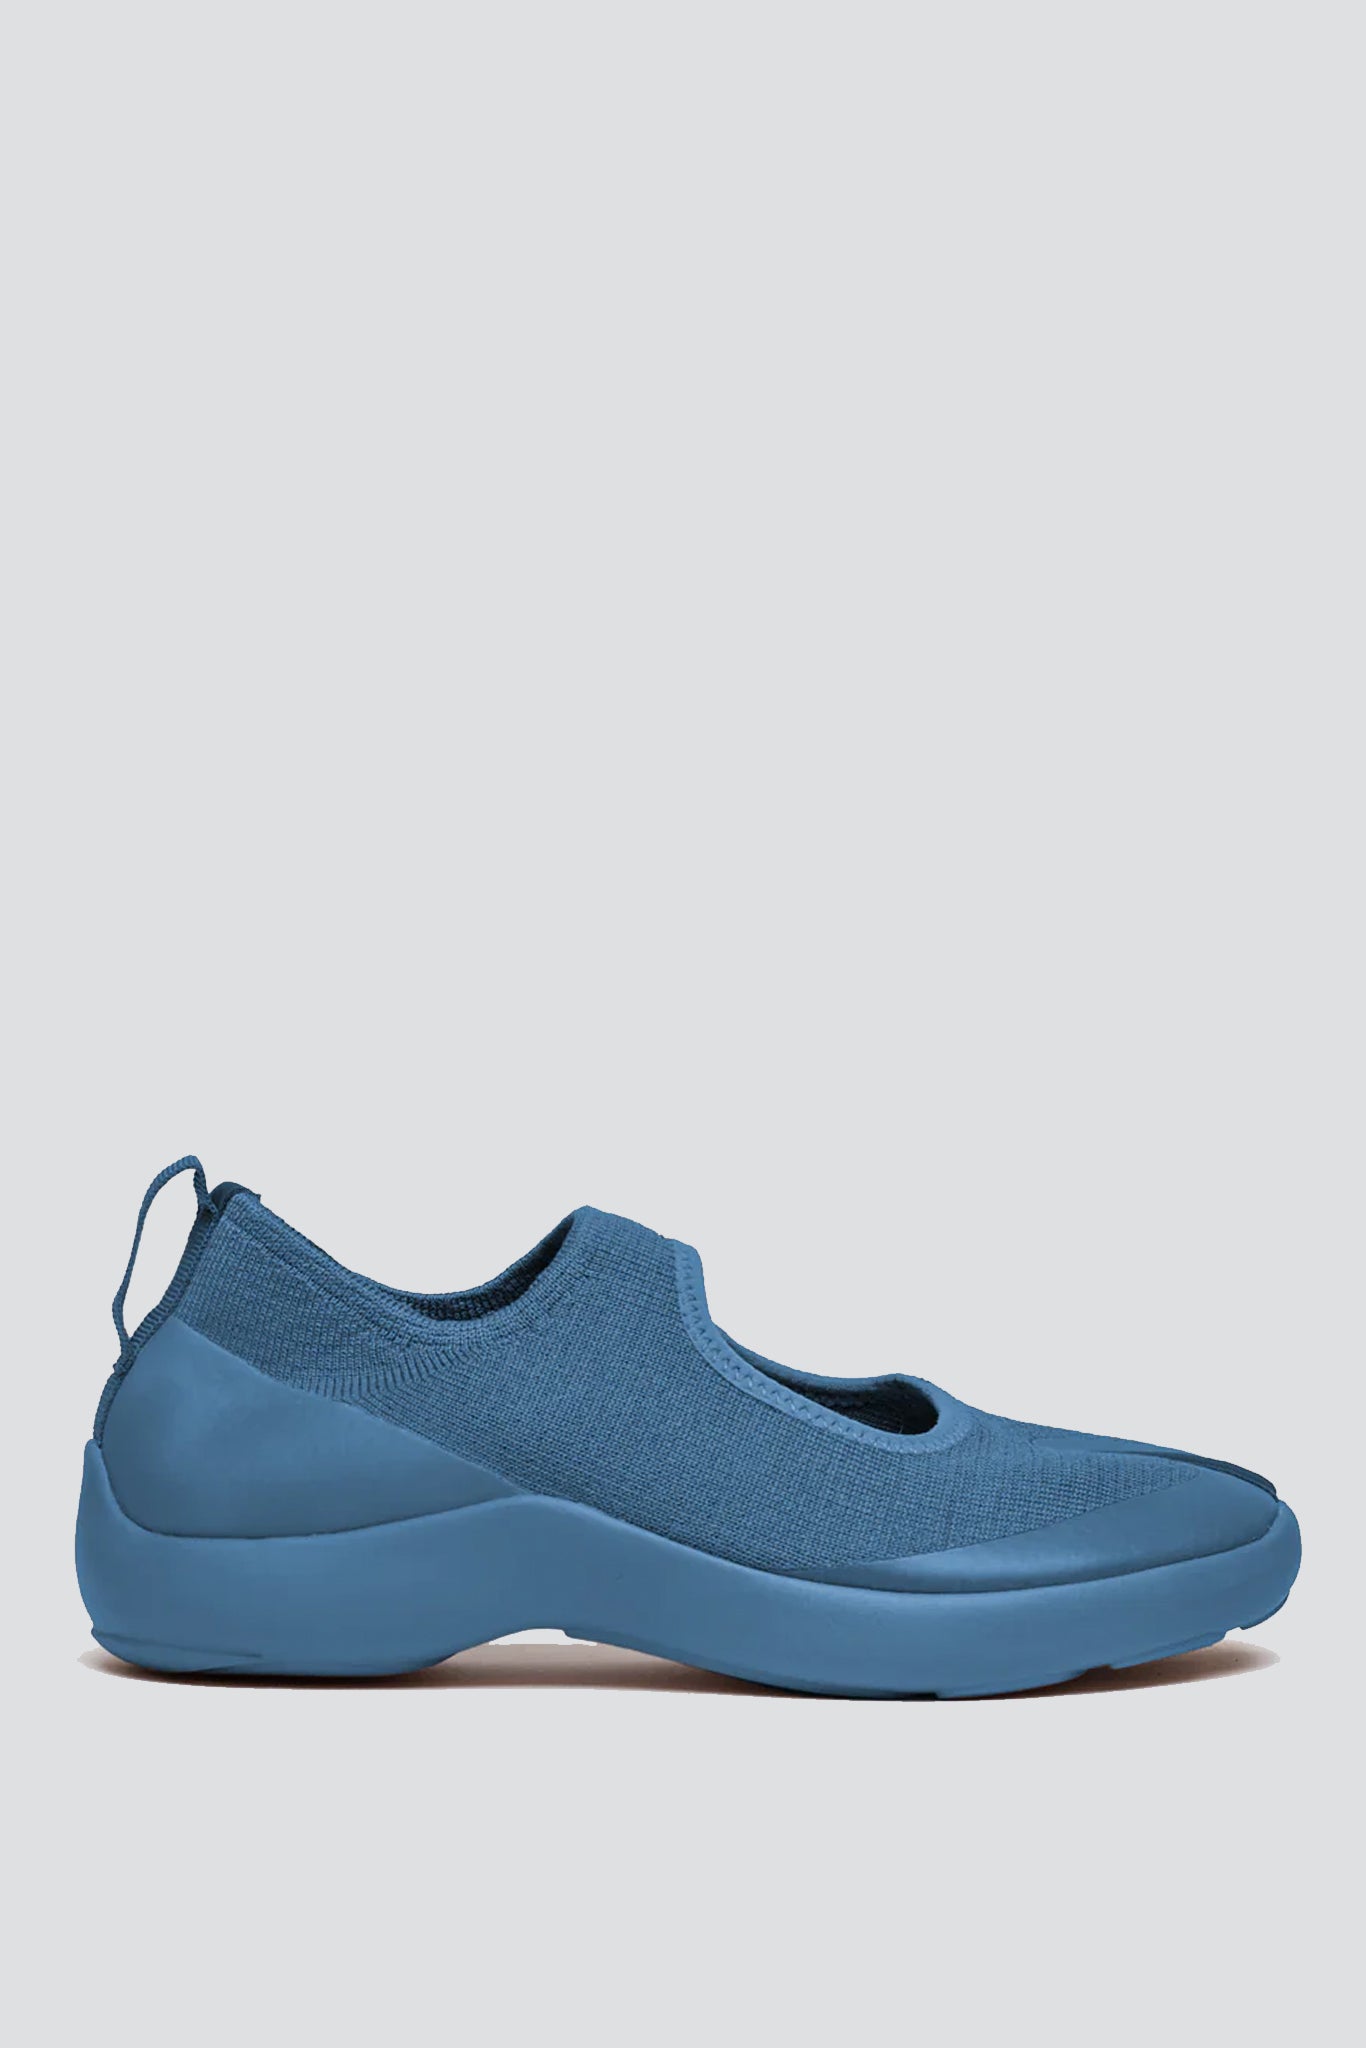 Blue Tabi Sandal